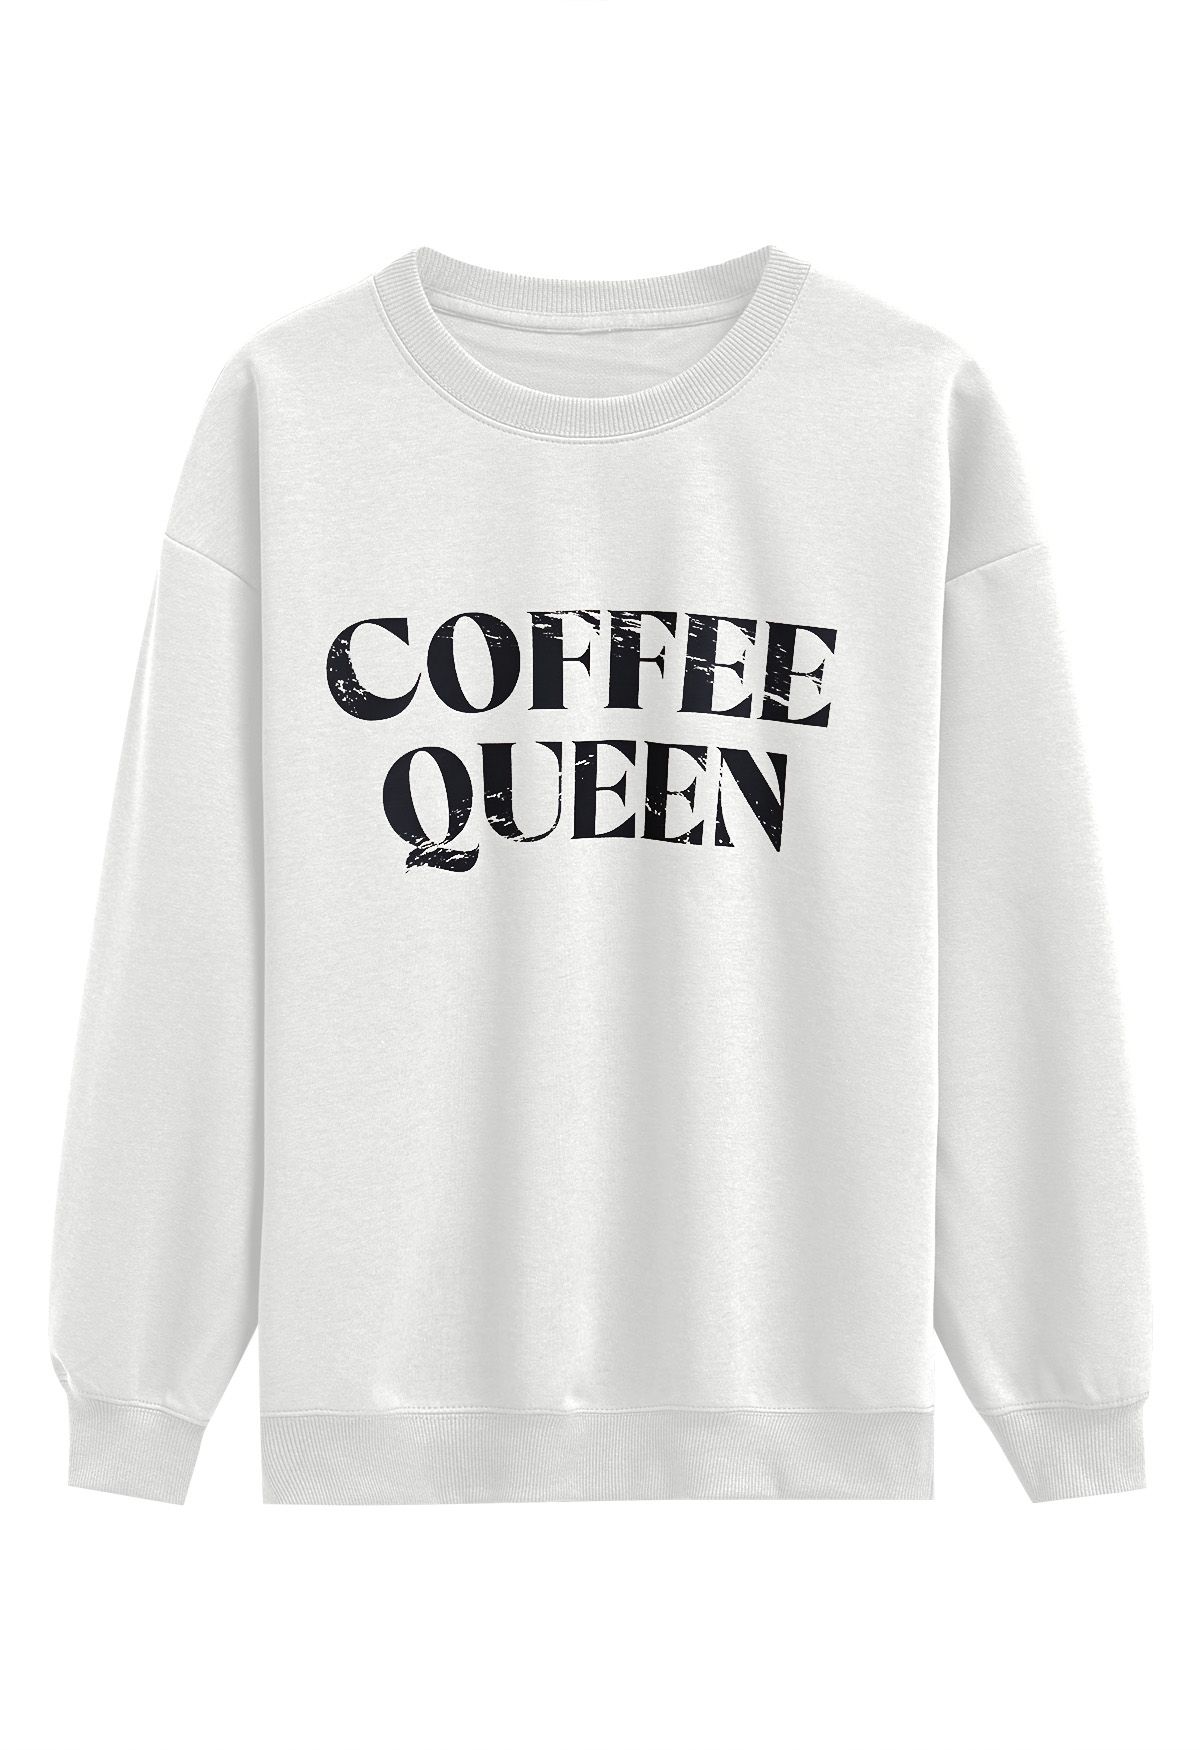 Coffee Queen Printed Sweatshirt in White